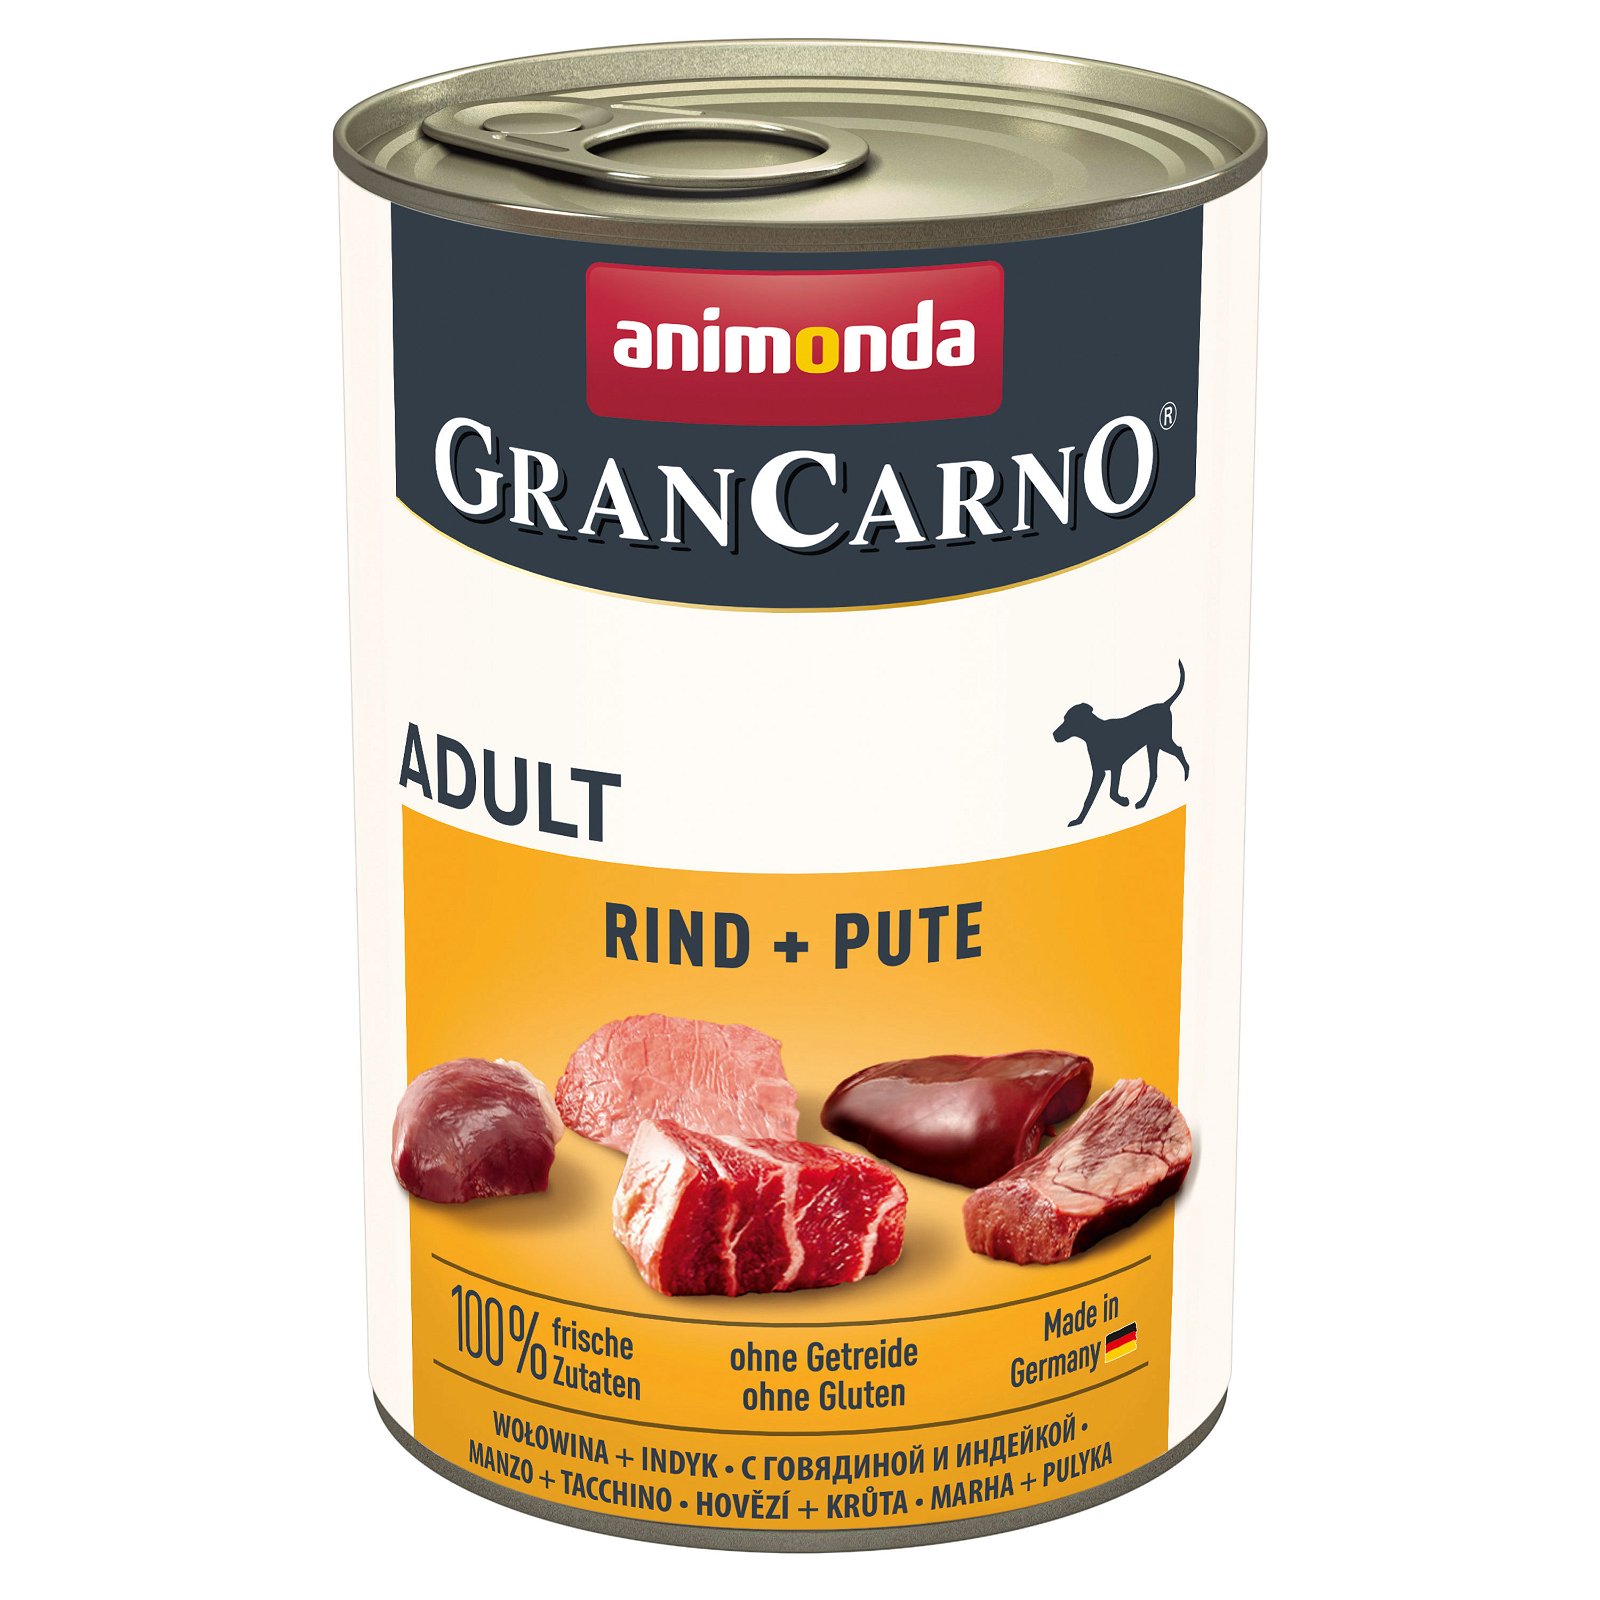 Hundefutter 'Animonda Cran Carno ® Adult', Rind & Pute